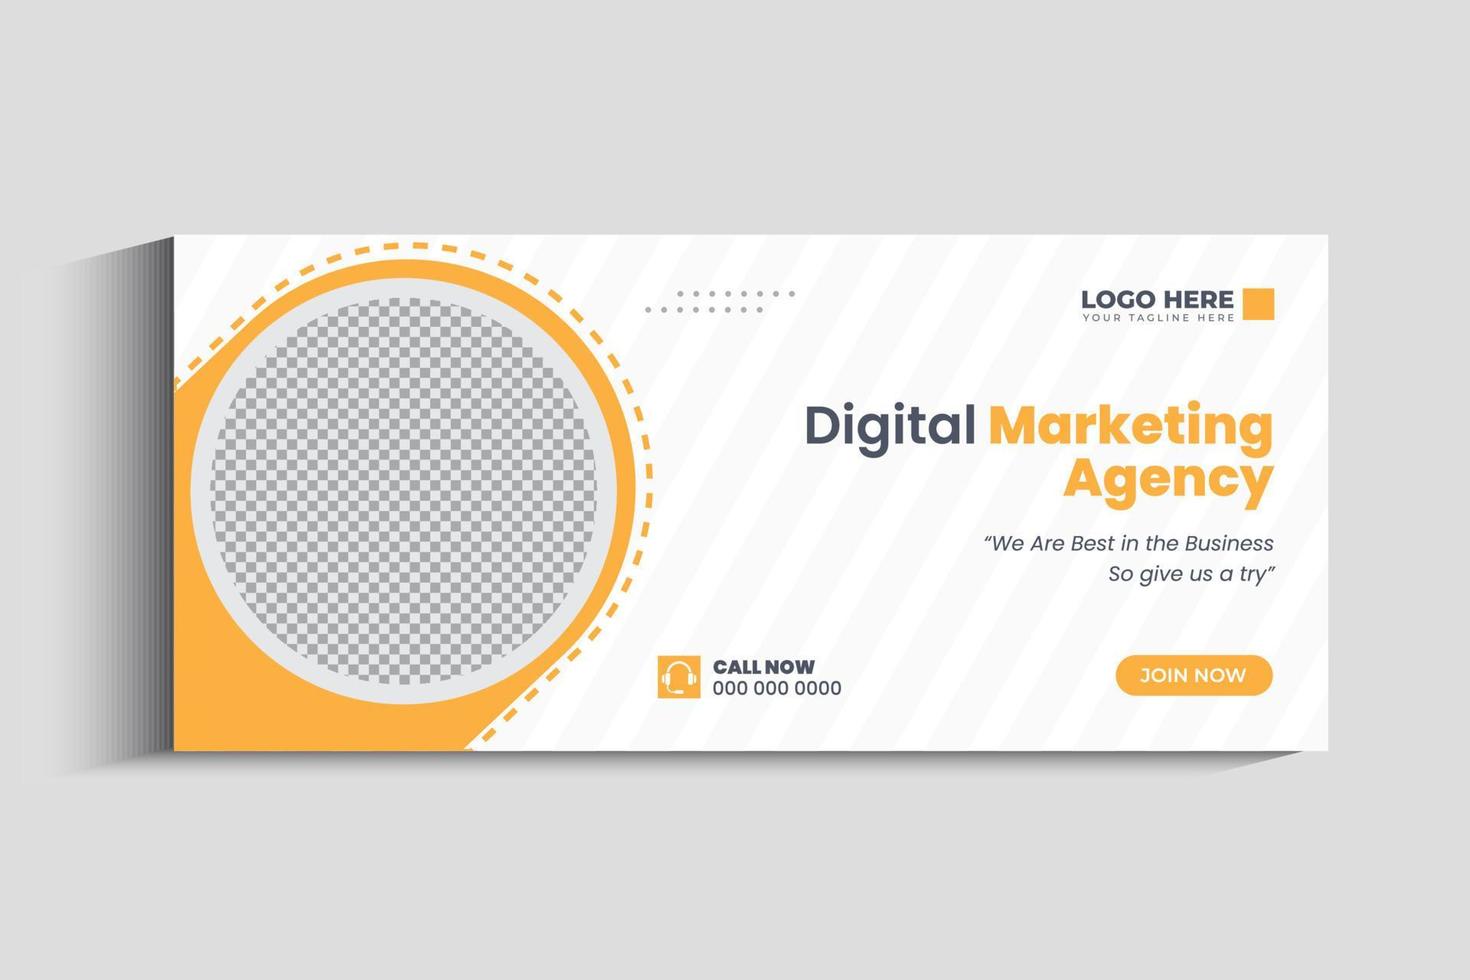 Digital Marketing cover banner for social media vector